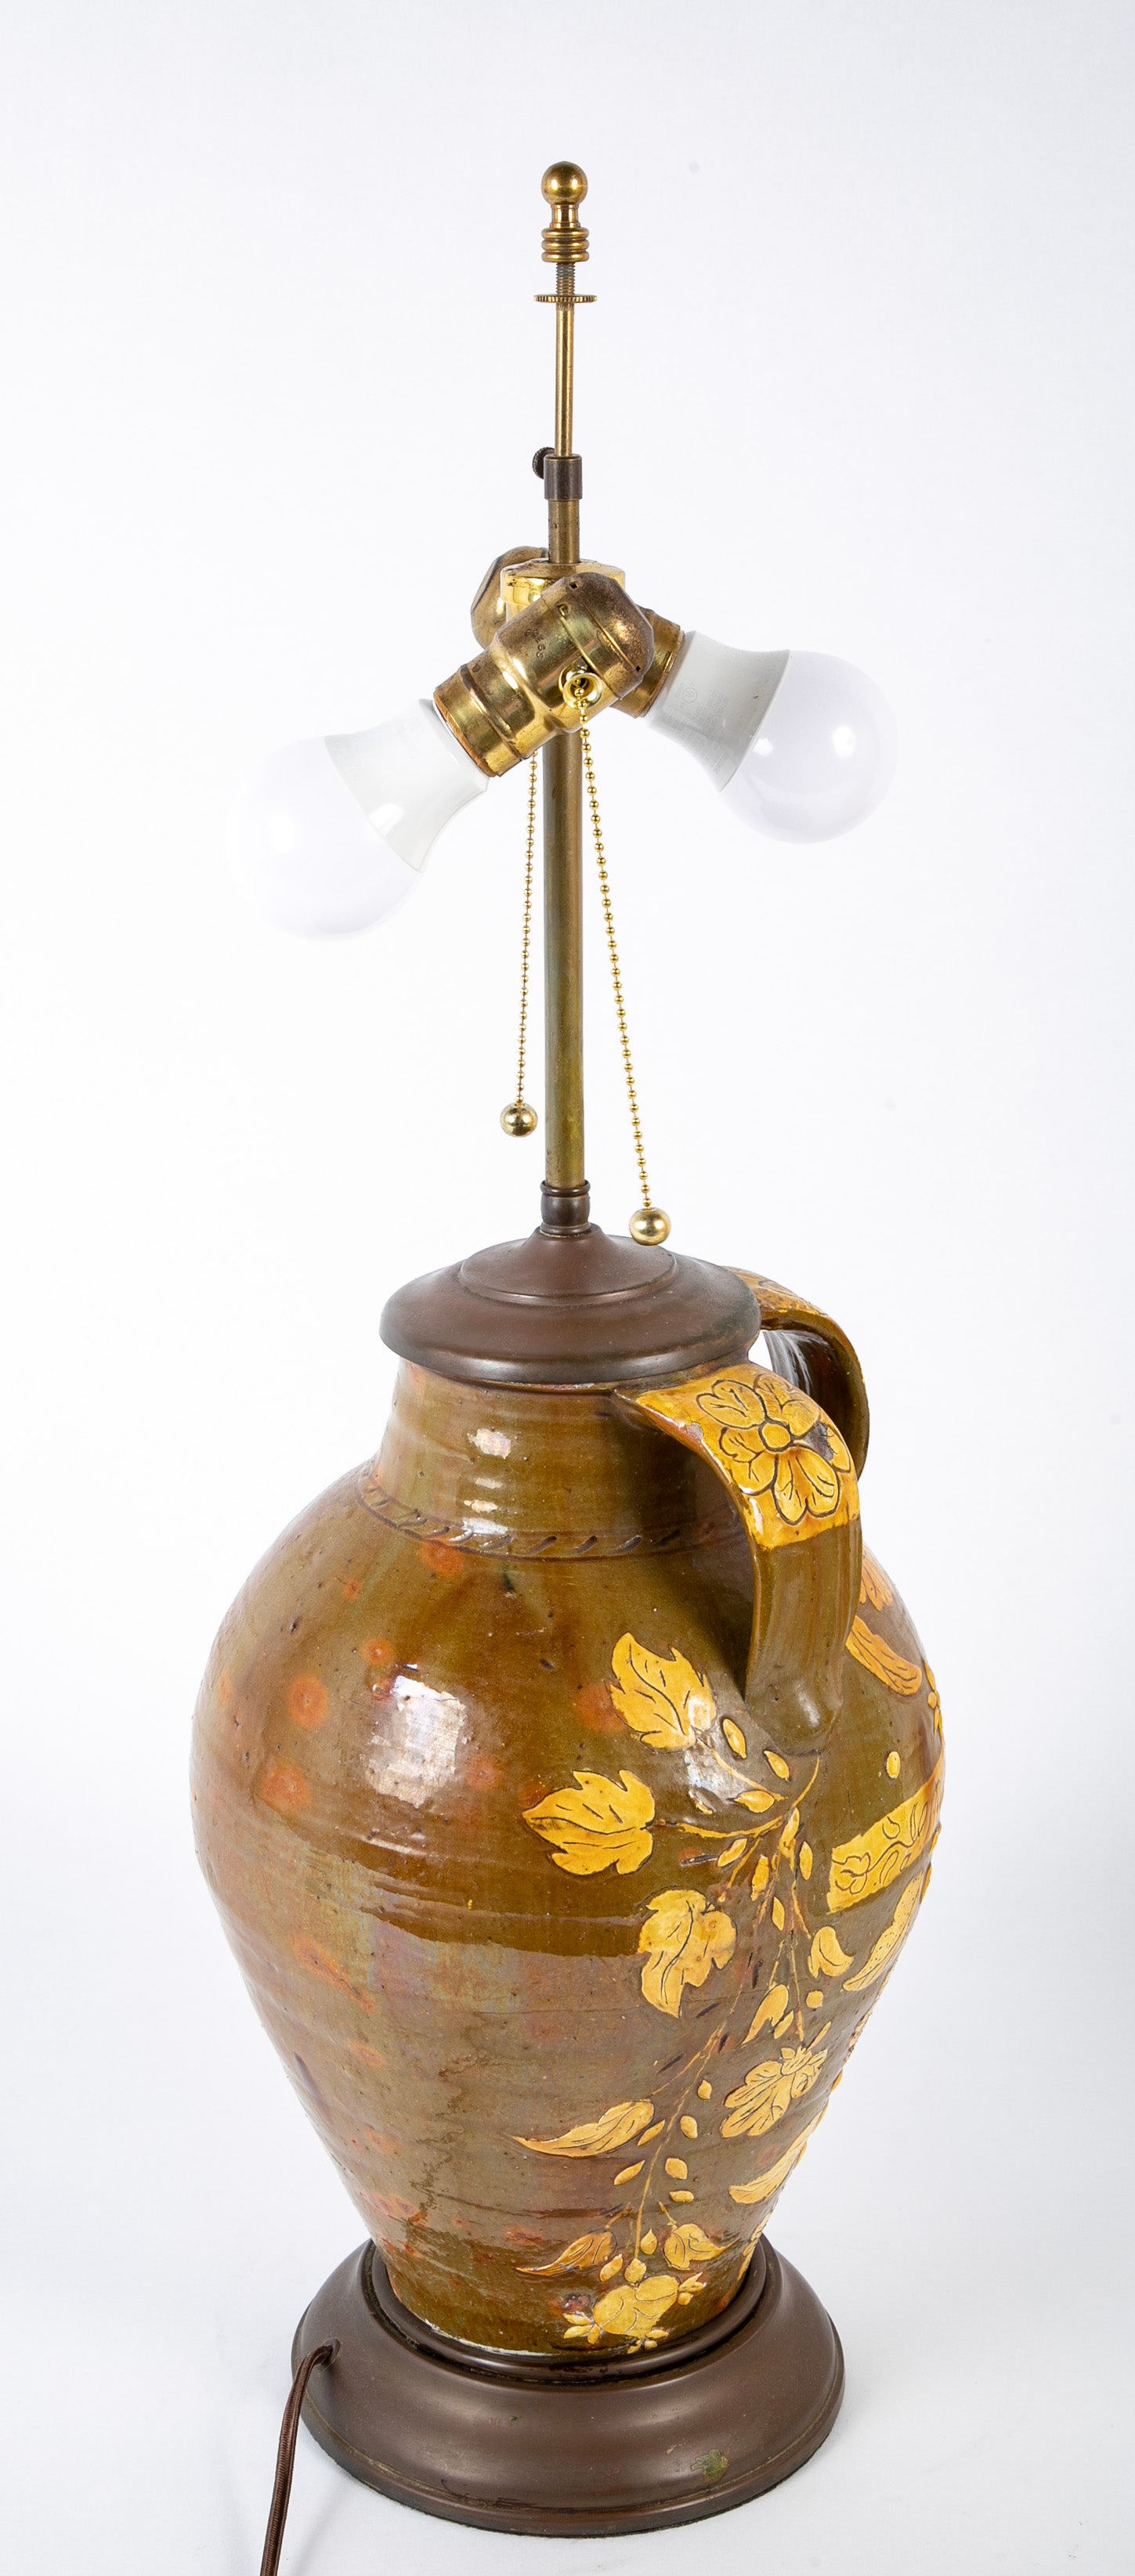 18th Century Spanish Glazed Ceramic Jar Mounted as a Table Lamp